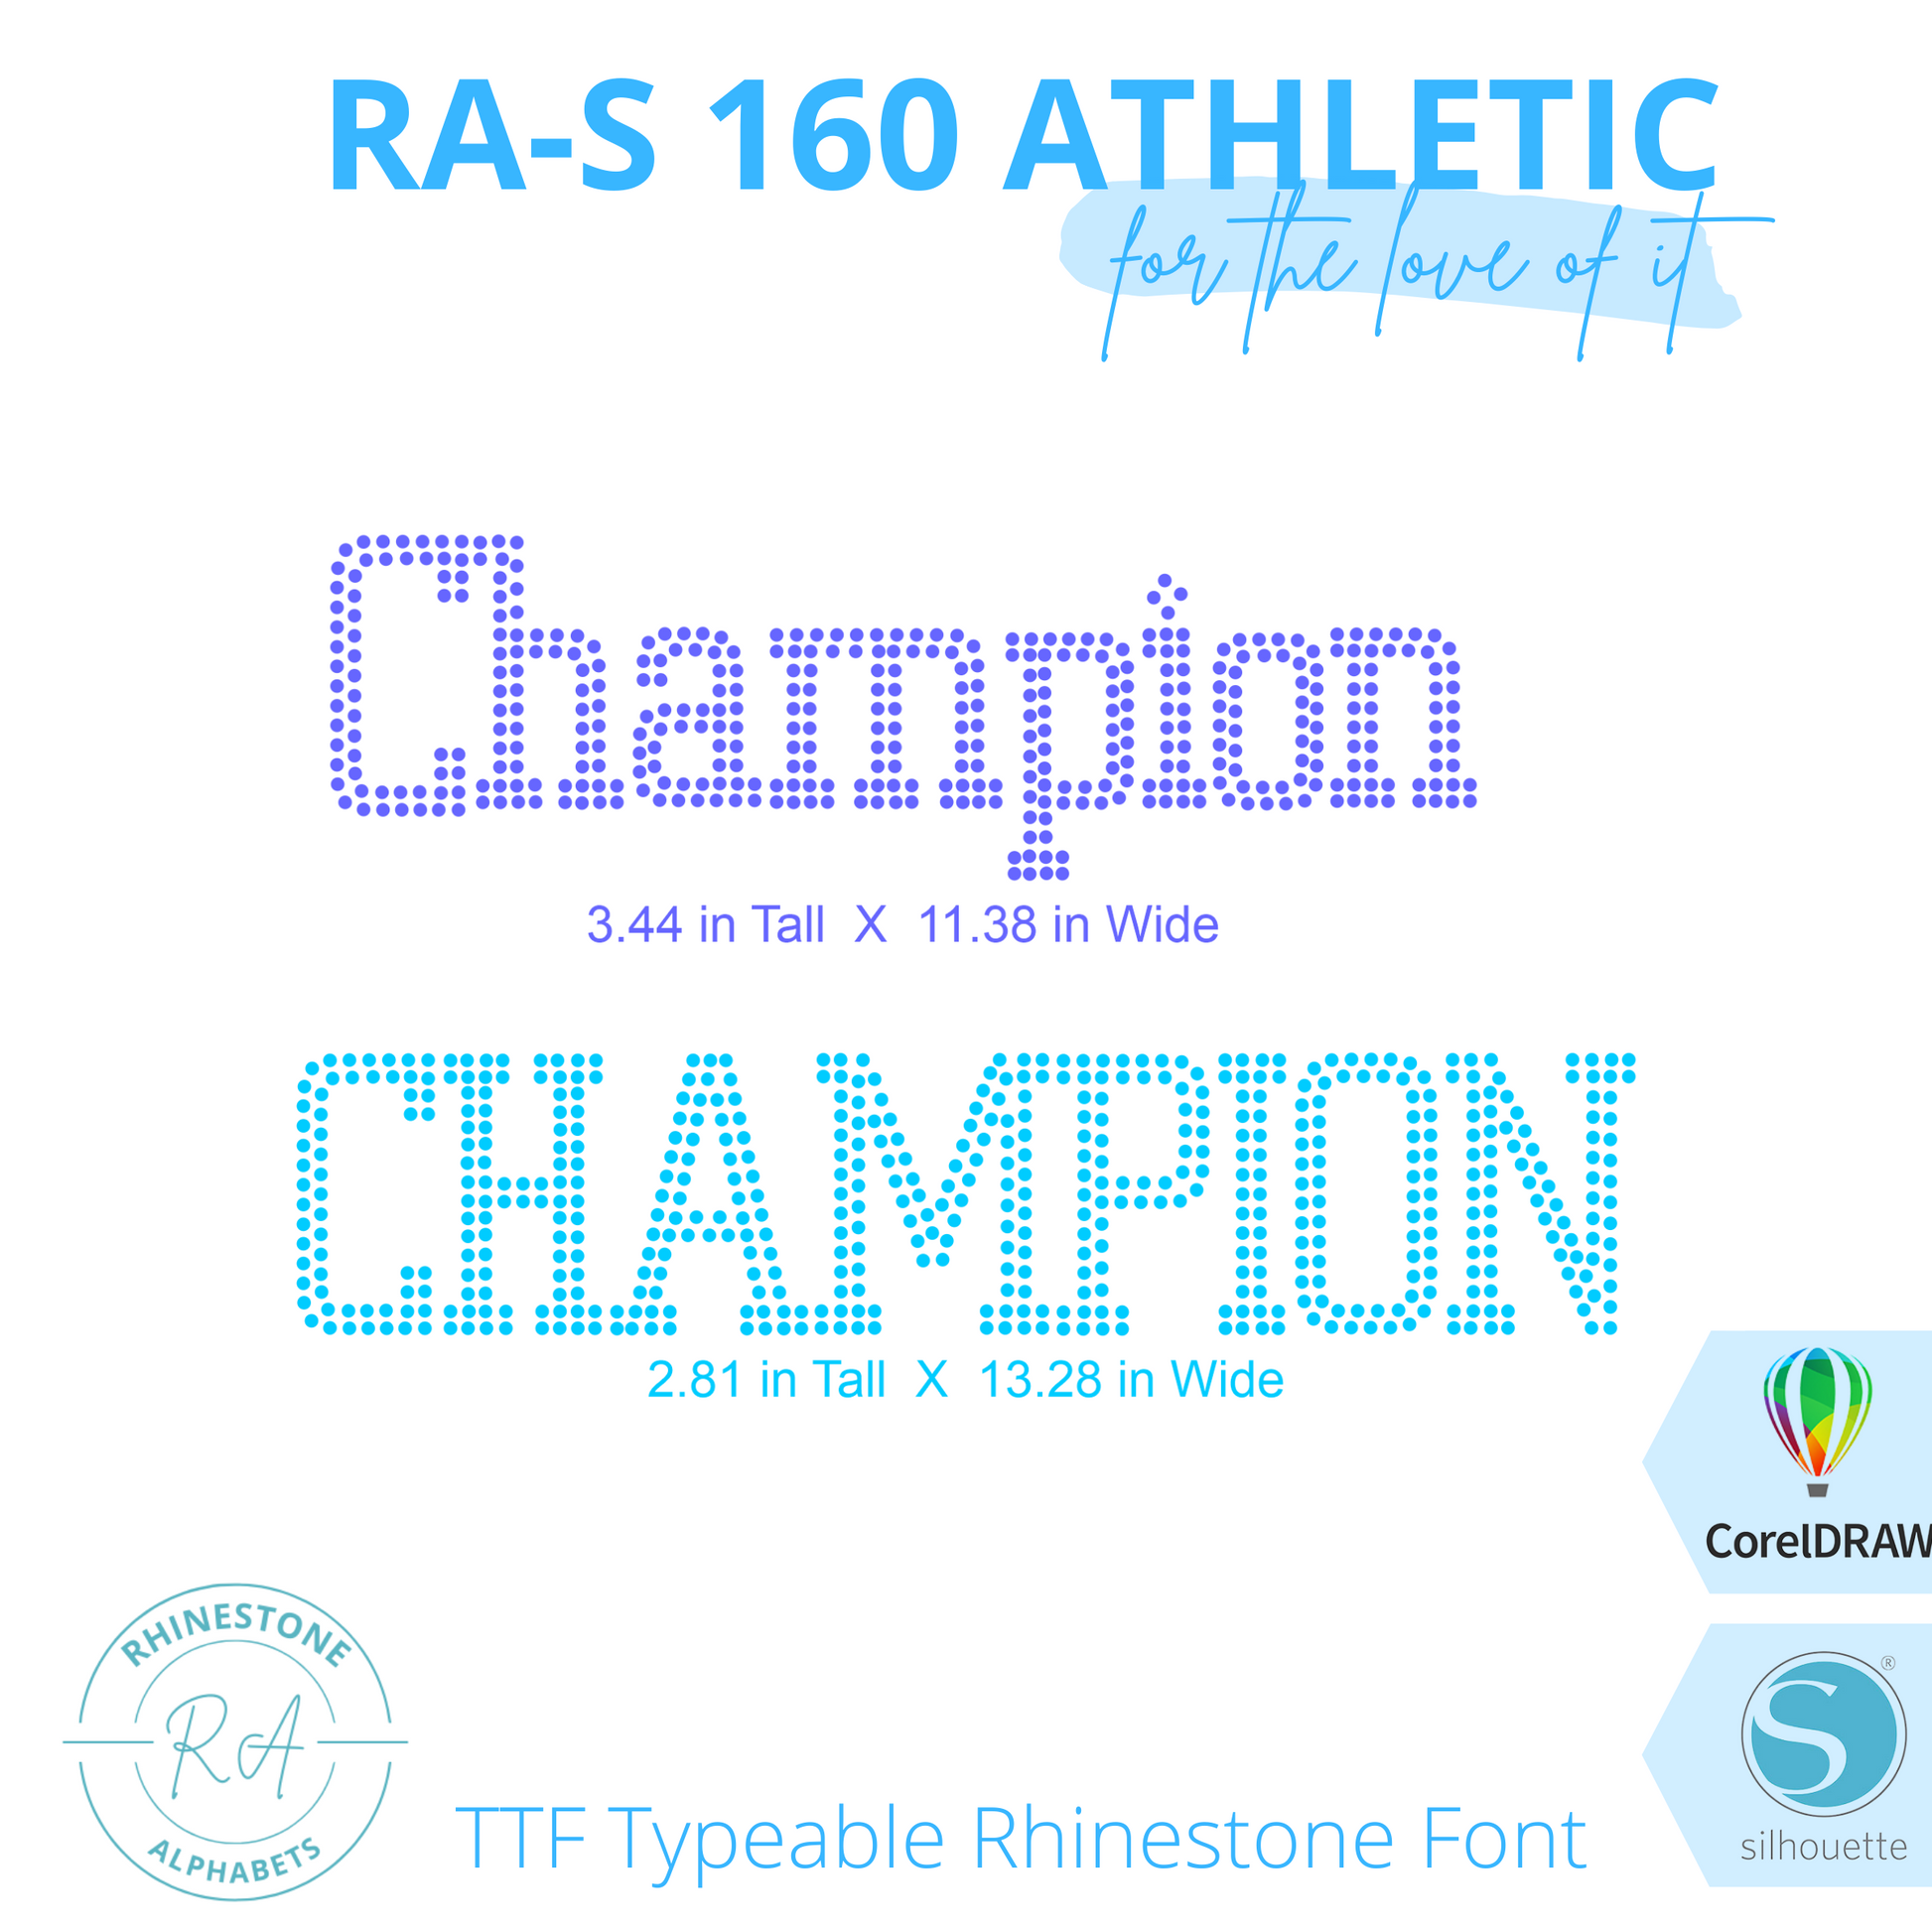 RA-S 160 Athletic - RhinestoneAlphabets